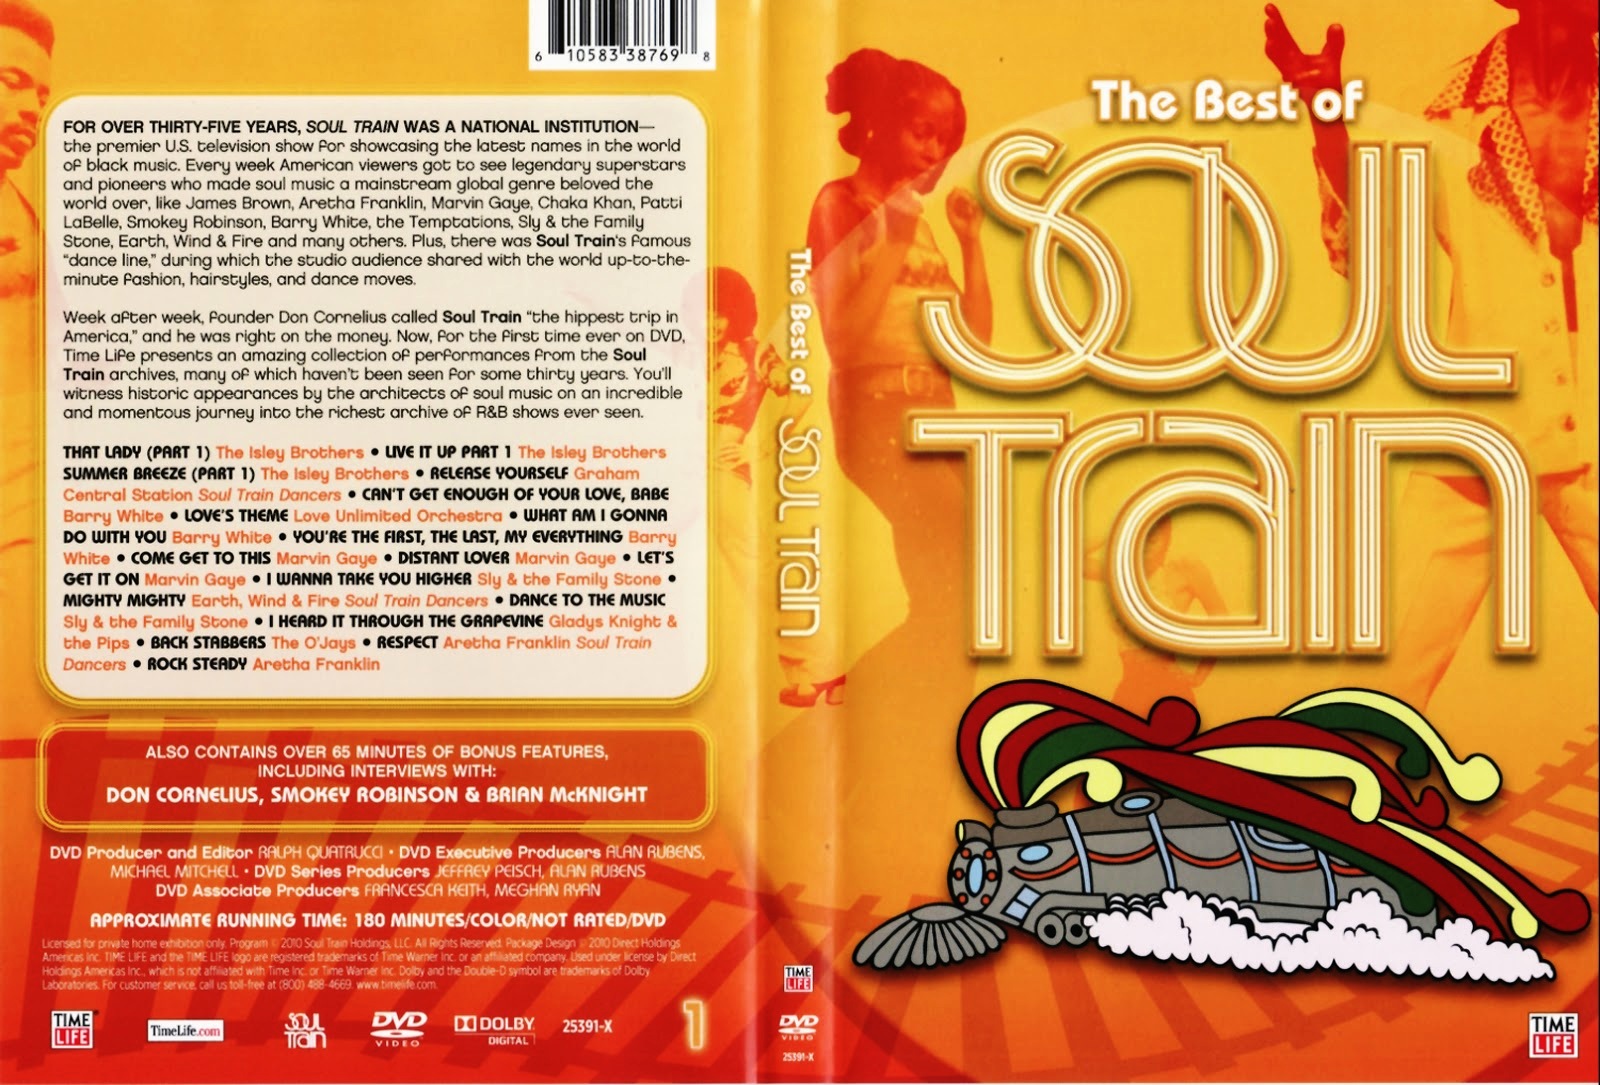 Soul train "The best of, vol.01" .